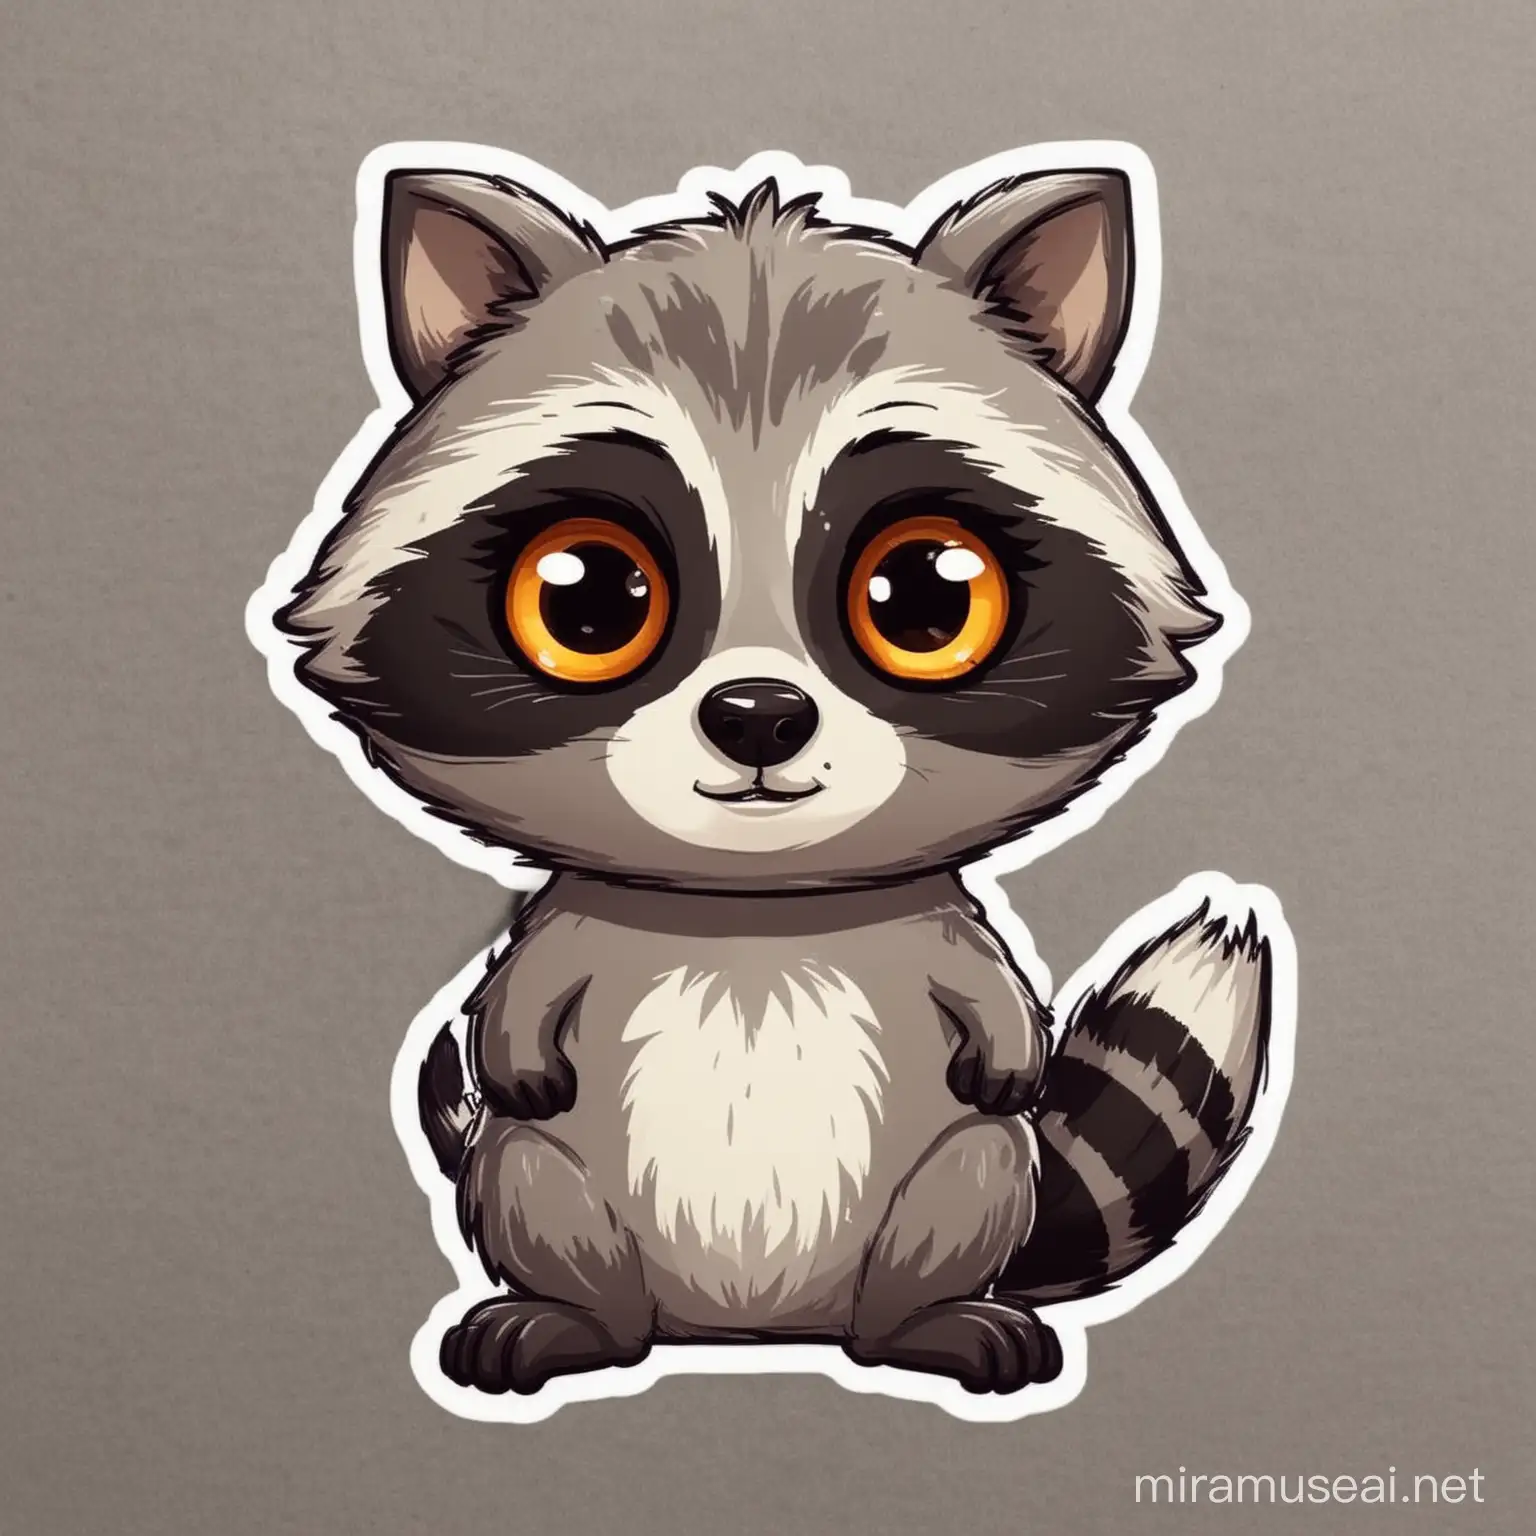 Cute cartoon raccoon with crazy eyes sticker
